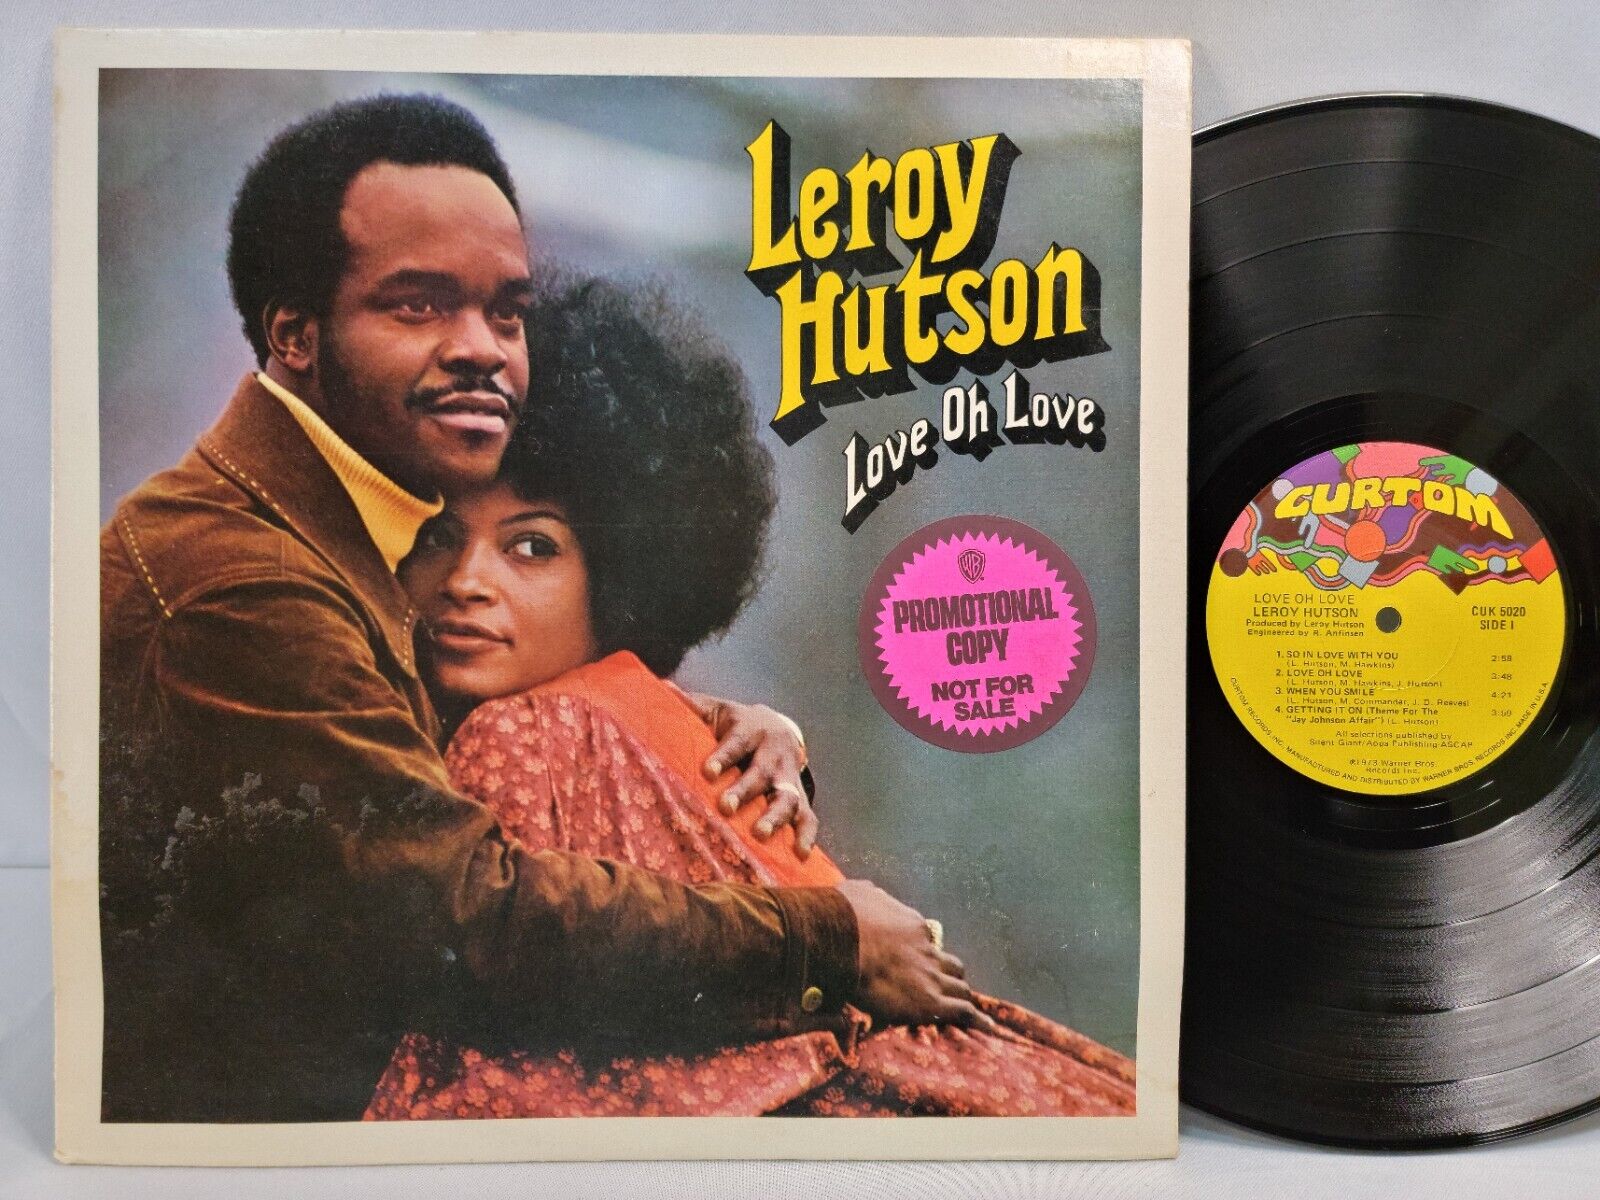 Leroy Hutson - Love Oh Love - OG 1973 LP - CURTOM - RARE SOUL - EX